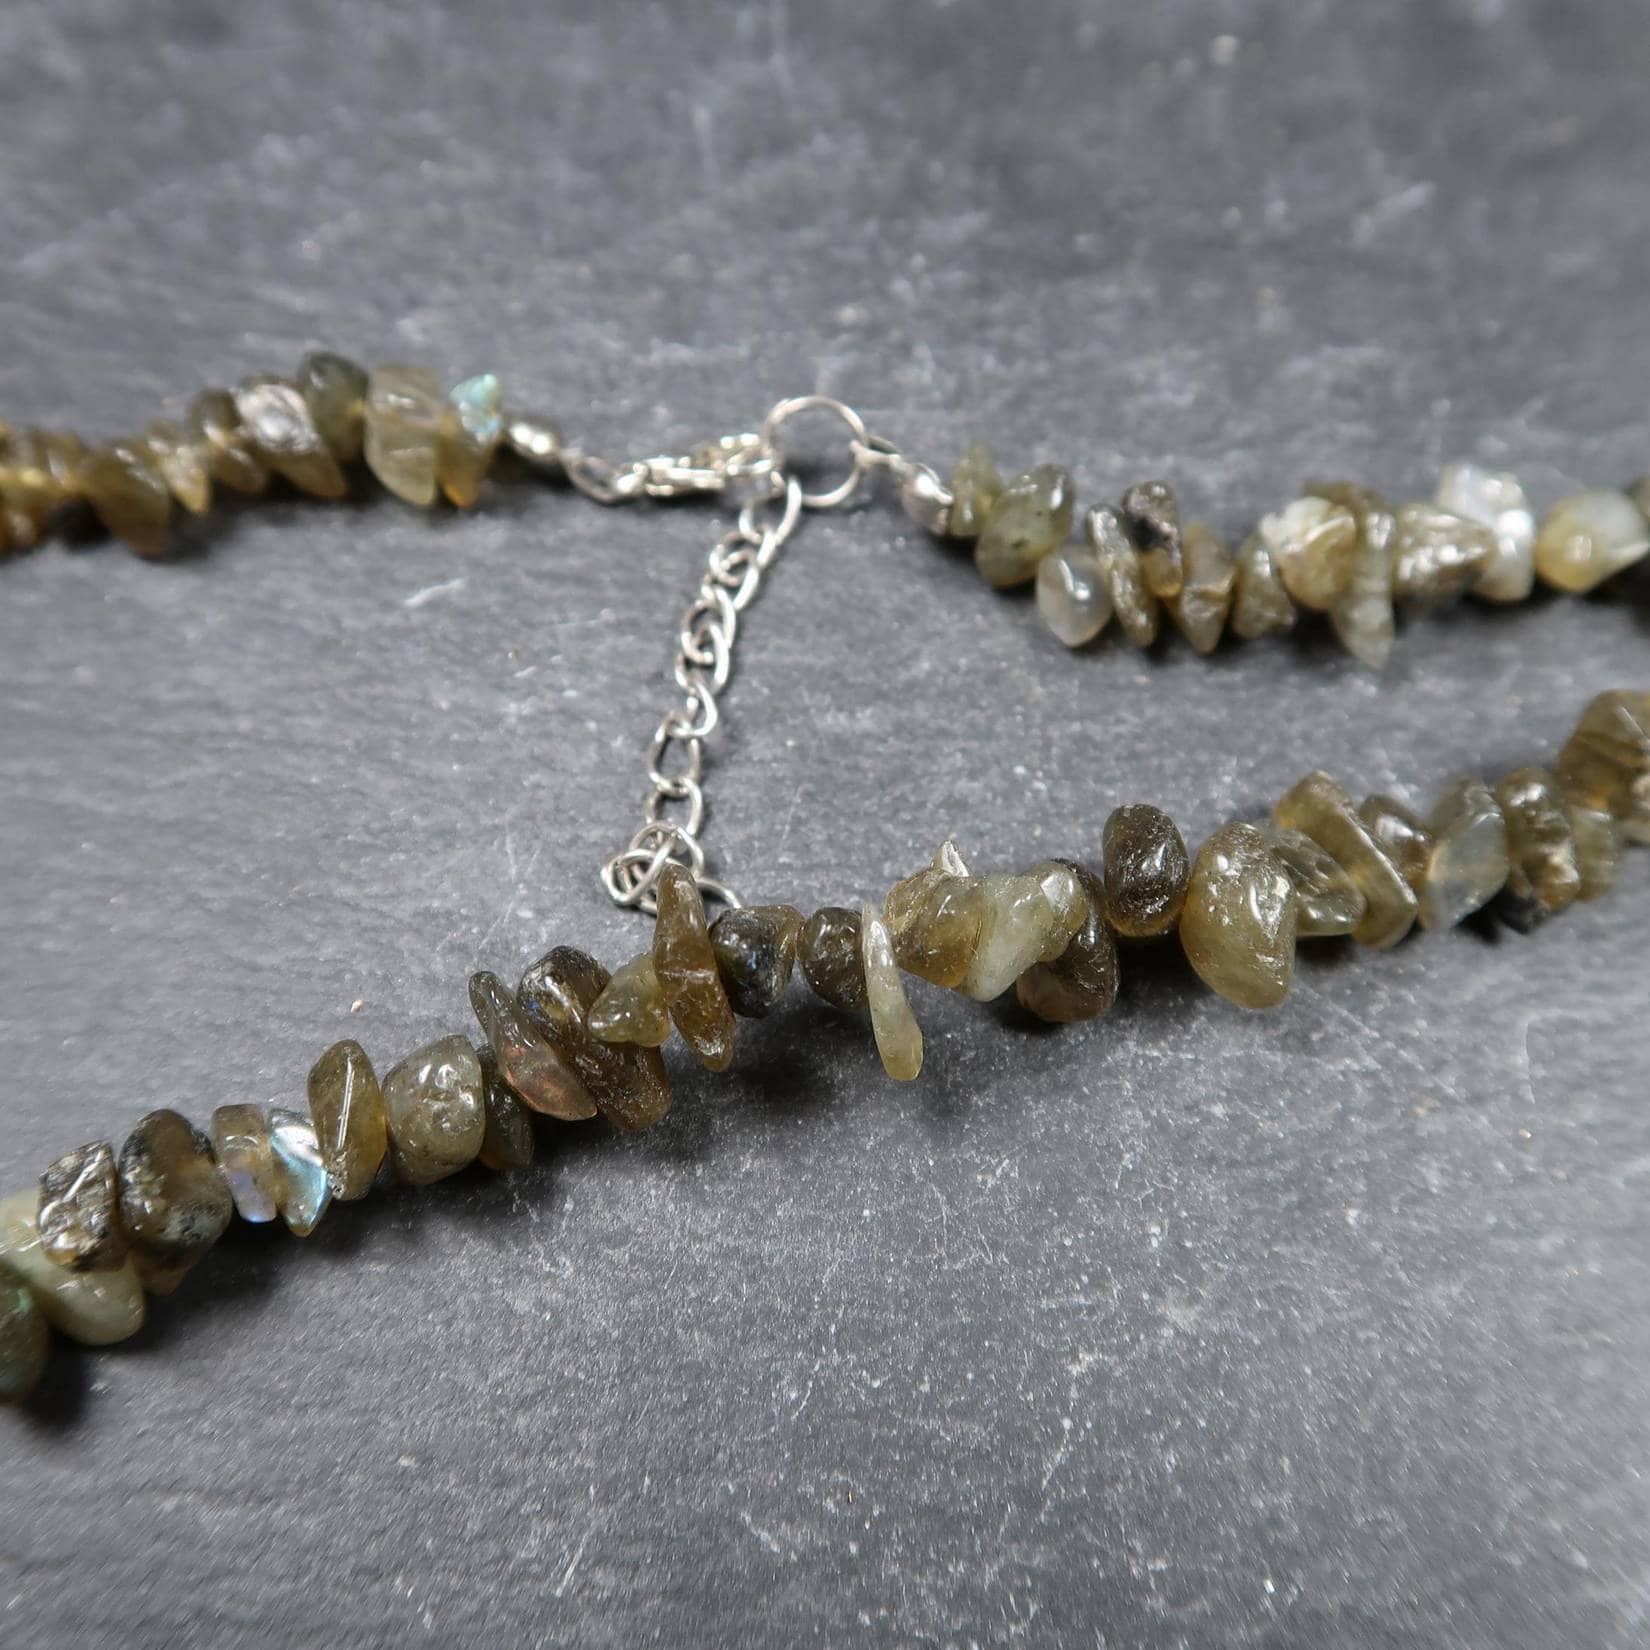 Labradorite necklaces - Buy Labradorite Jewellery Online - UK Jewellery